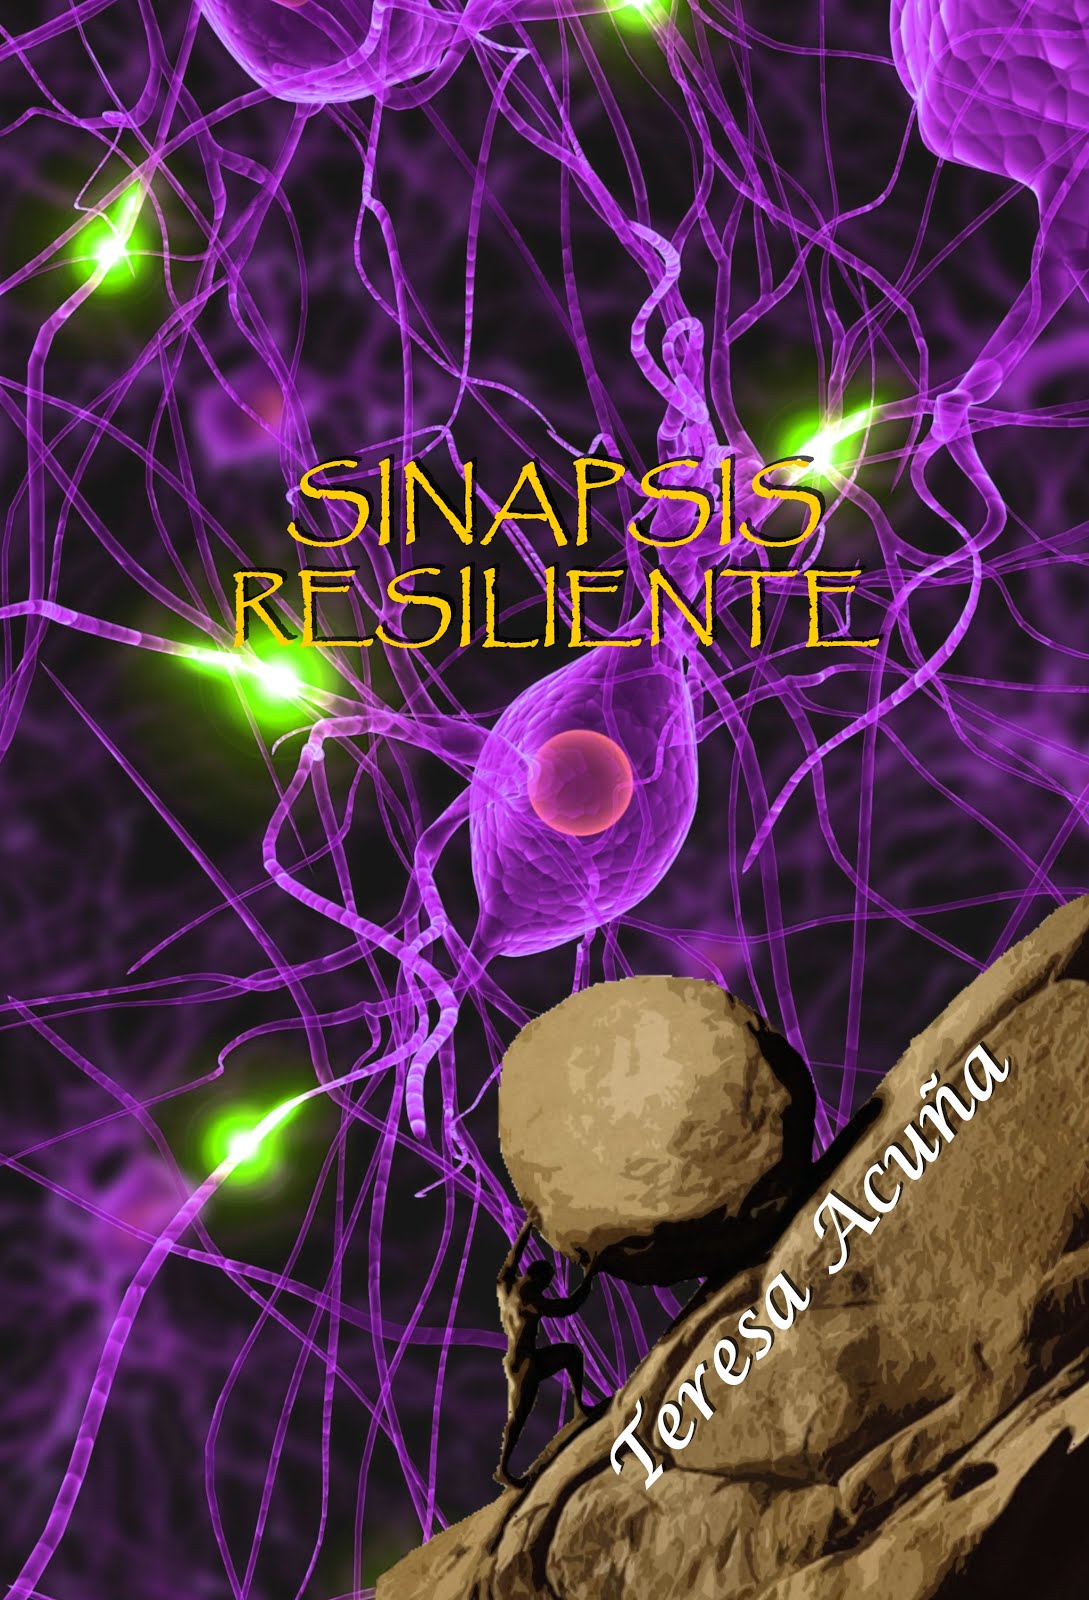 Sinapsis Resiliente